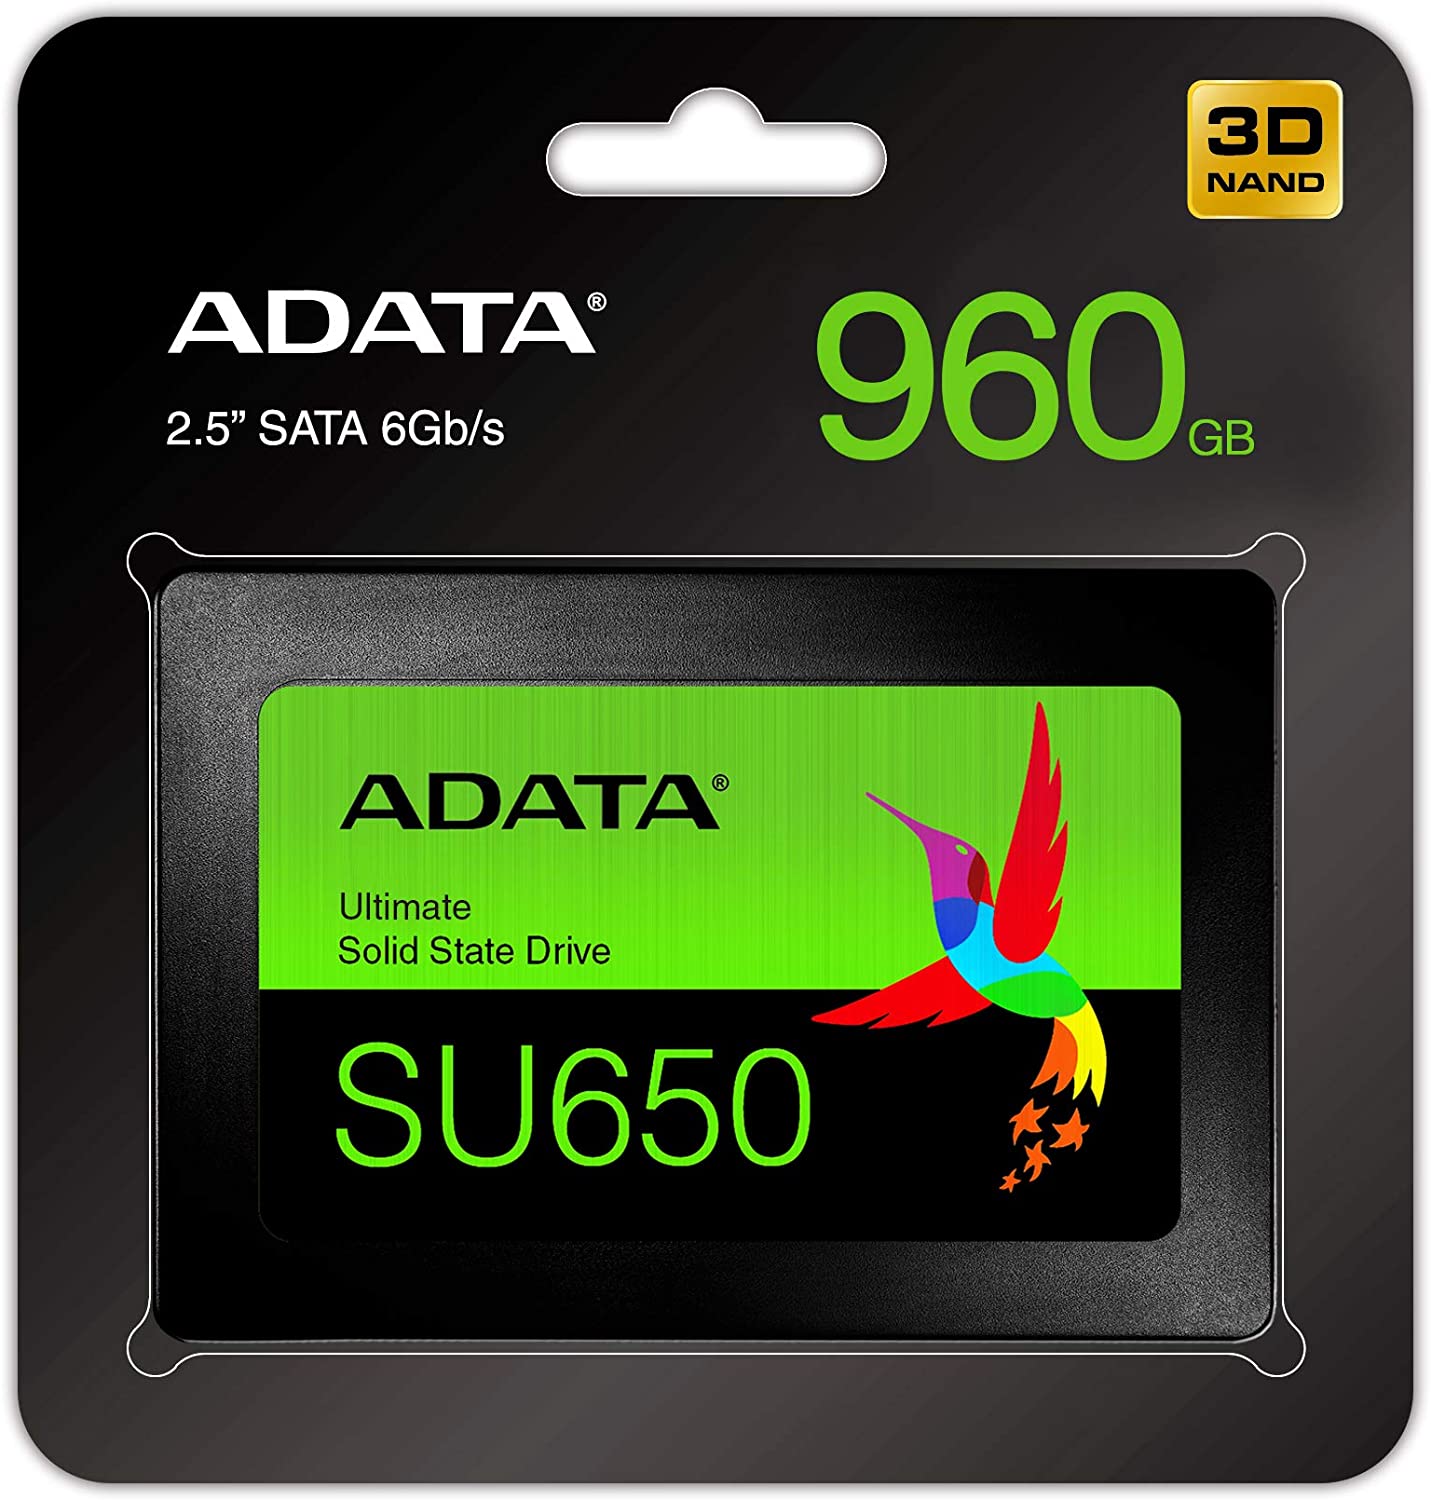 SSD 960 GB Sata Adata - NOORHS Latinoamérica, S.A. de C.V.